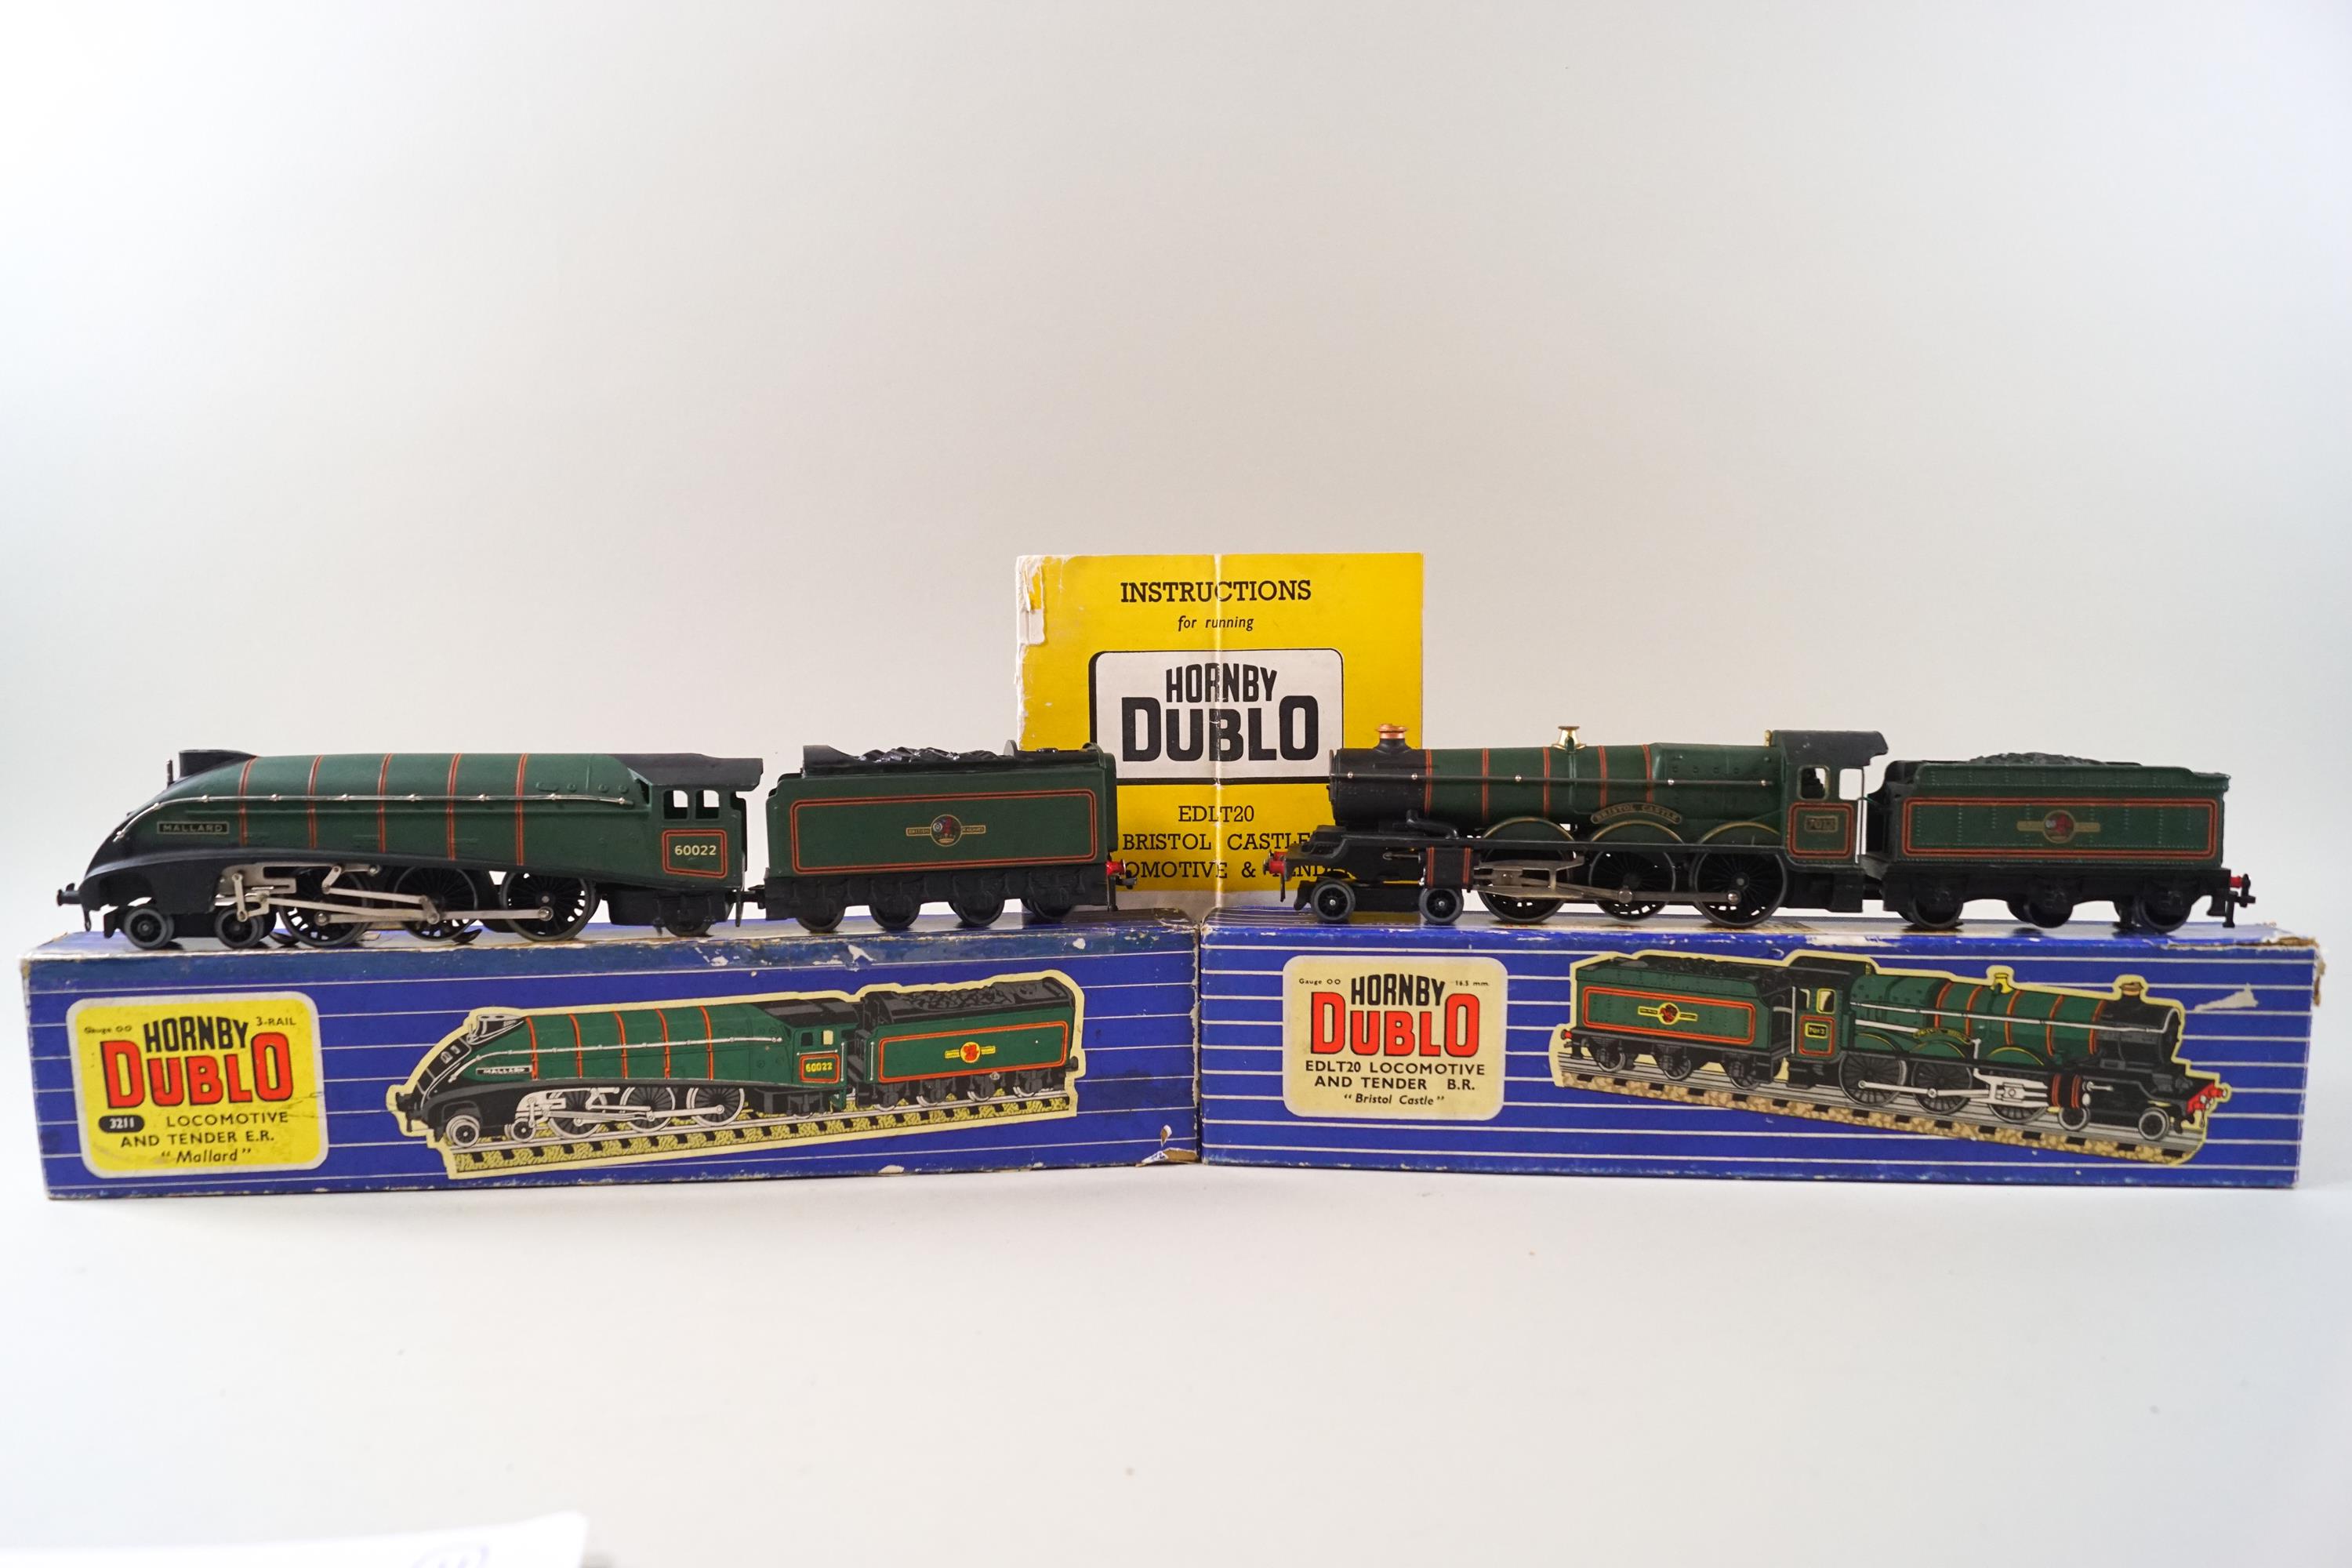 Hornby Dublo: 3211 "Mallard" Locomotive and tender,